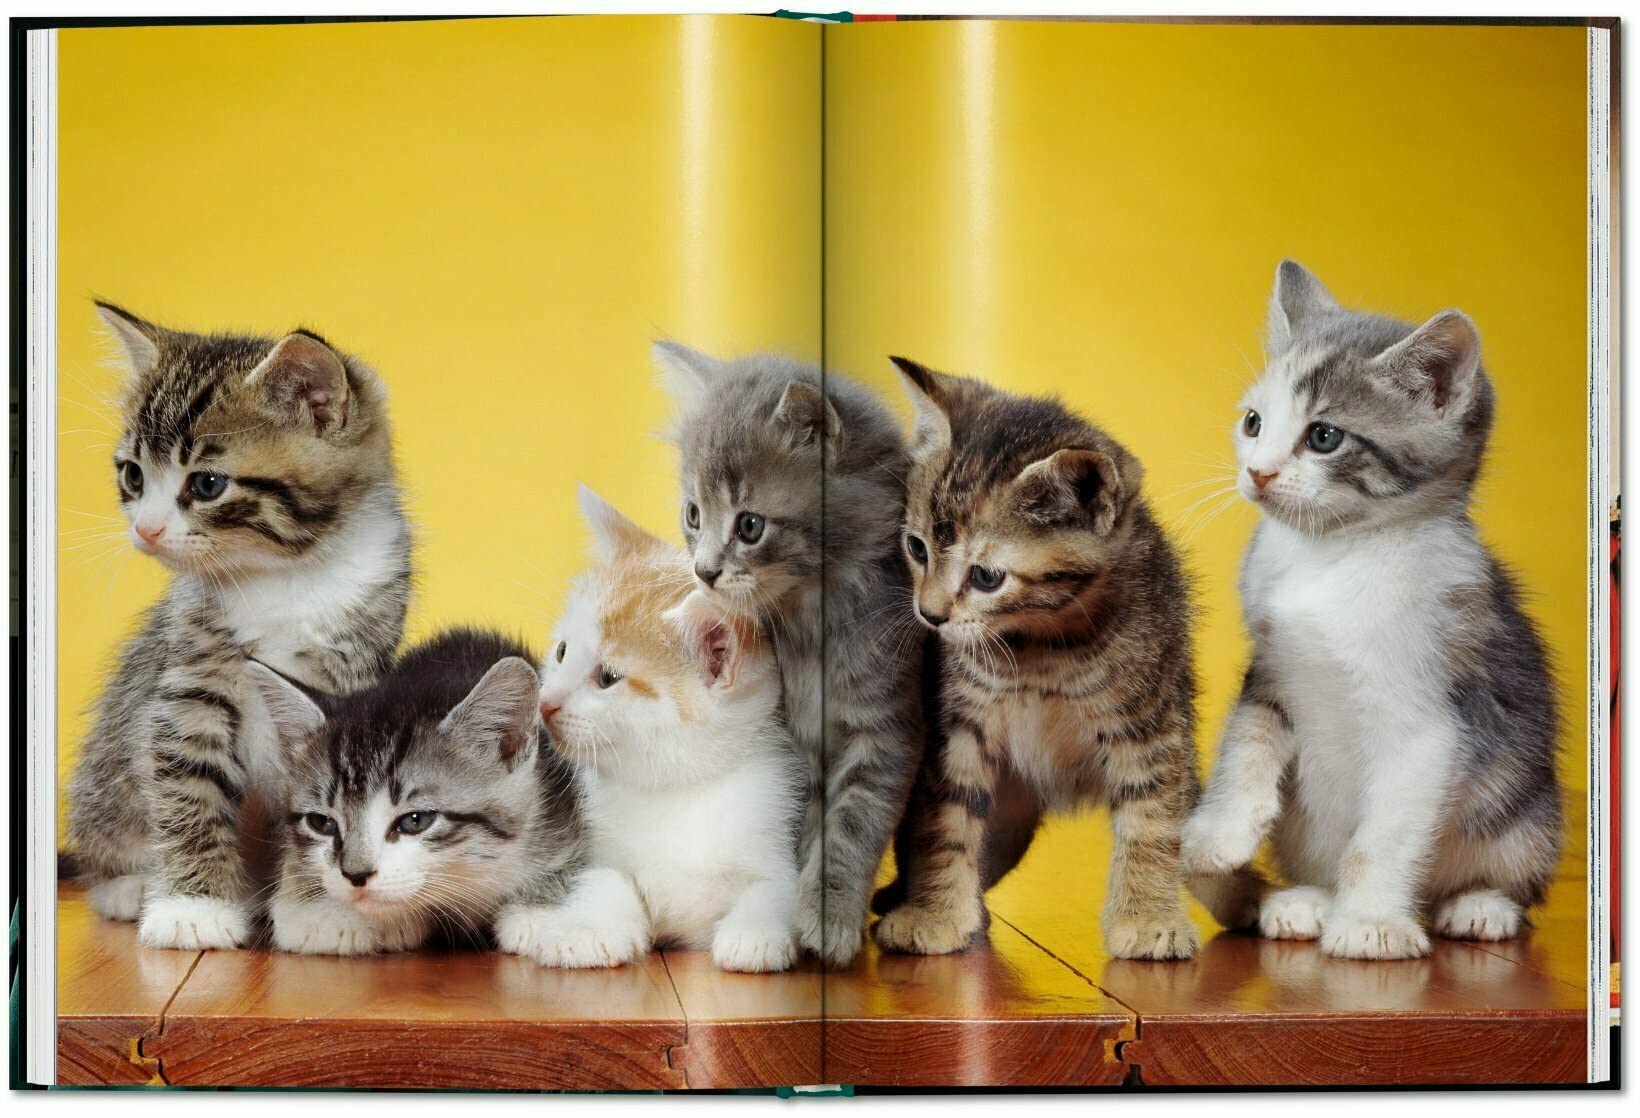 Cats. Walter Chandoha. Photographs 1942–2018 - Small